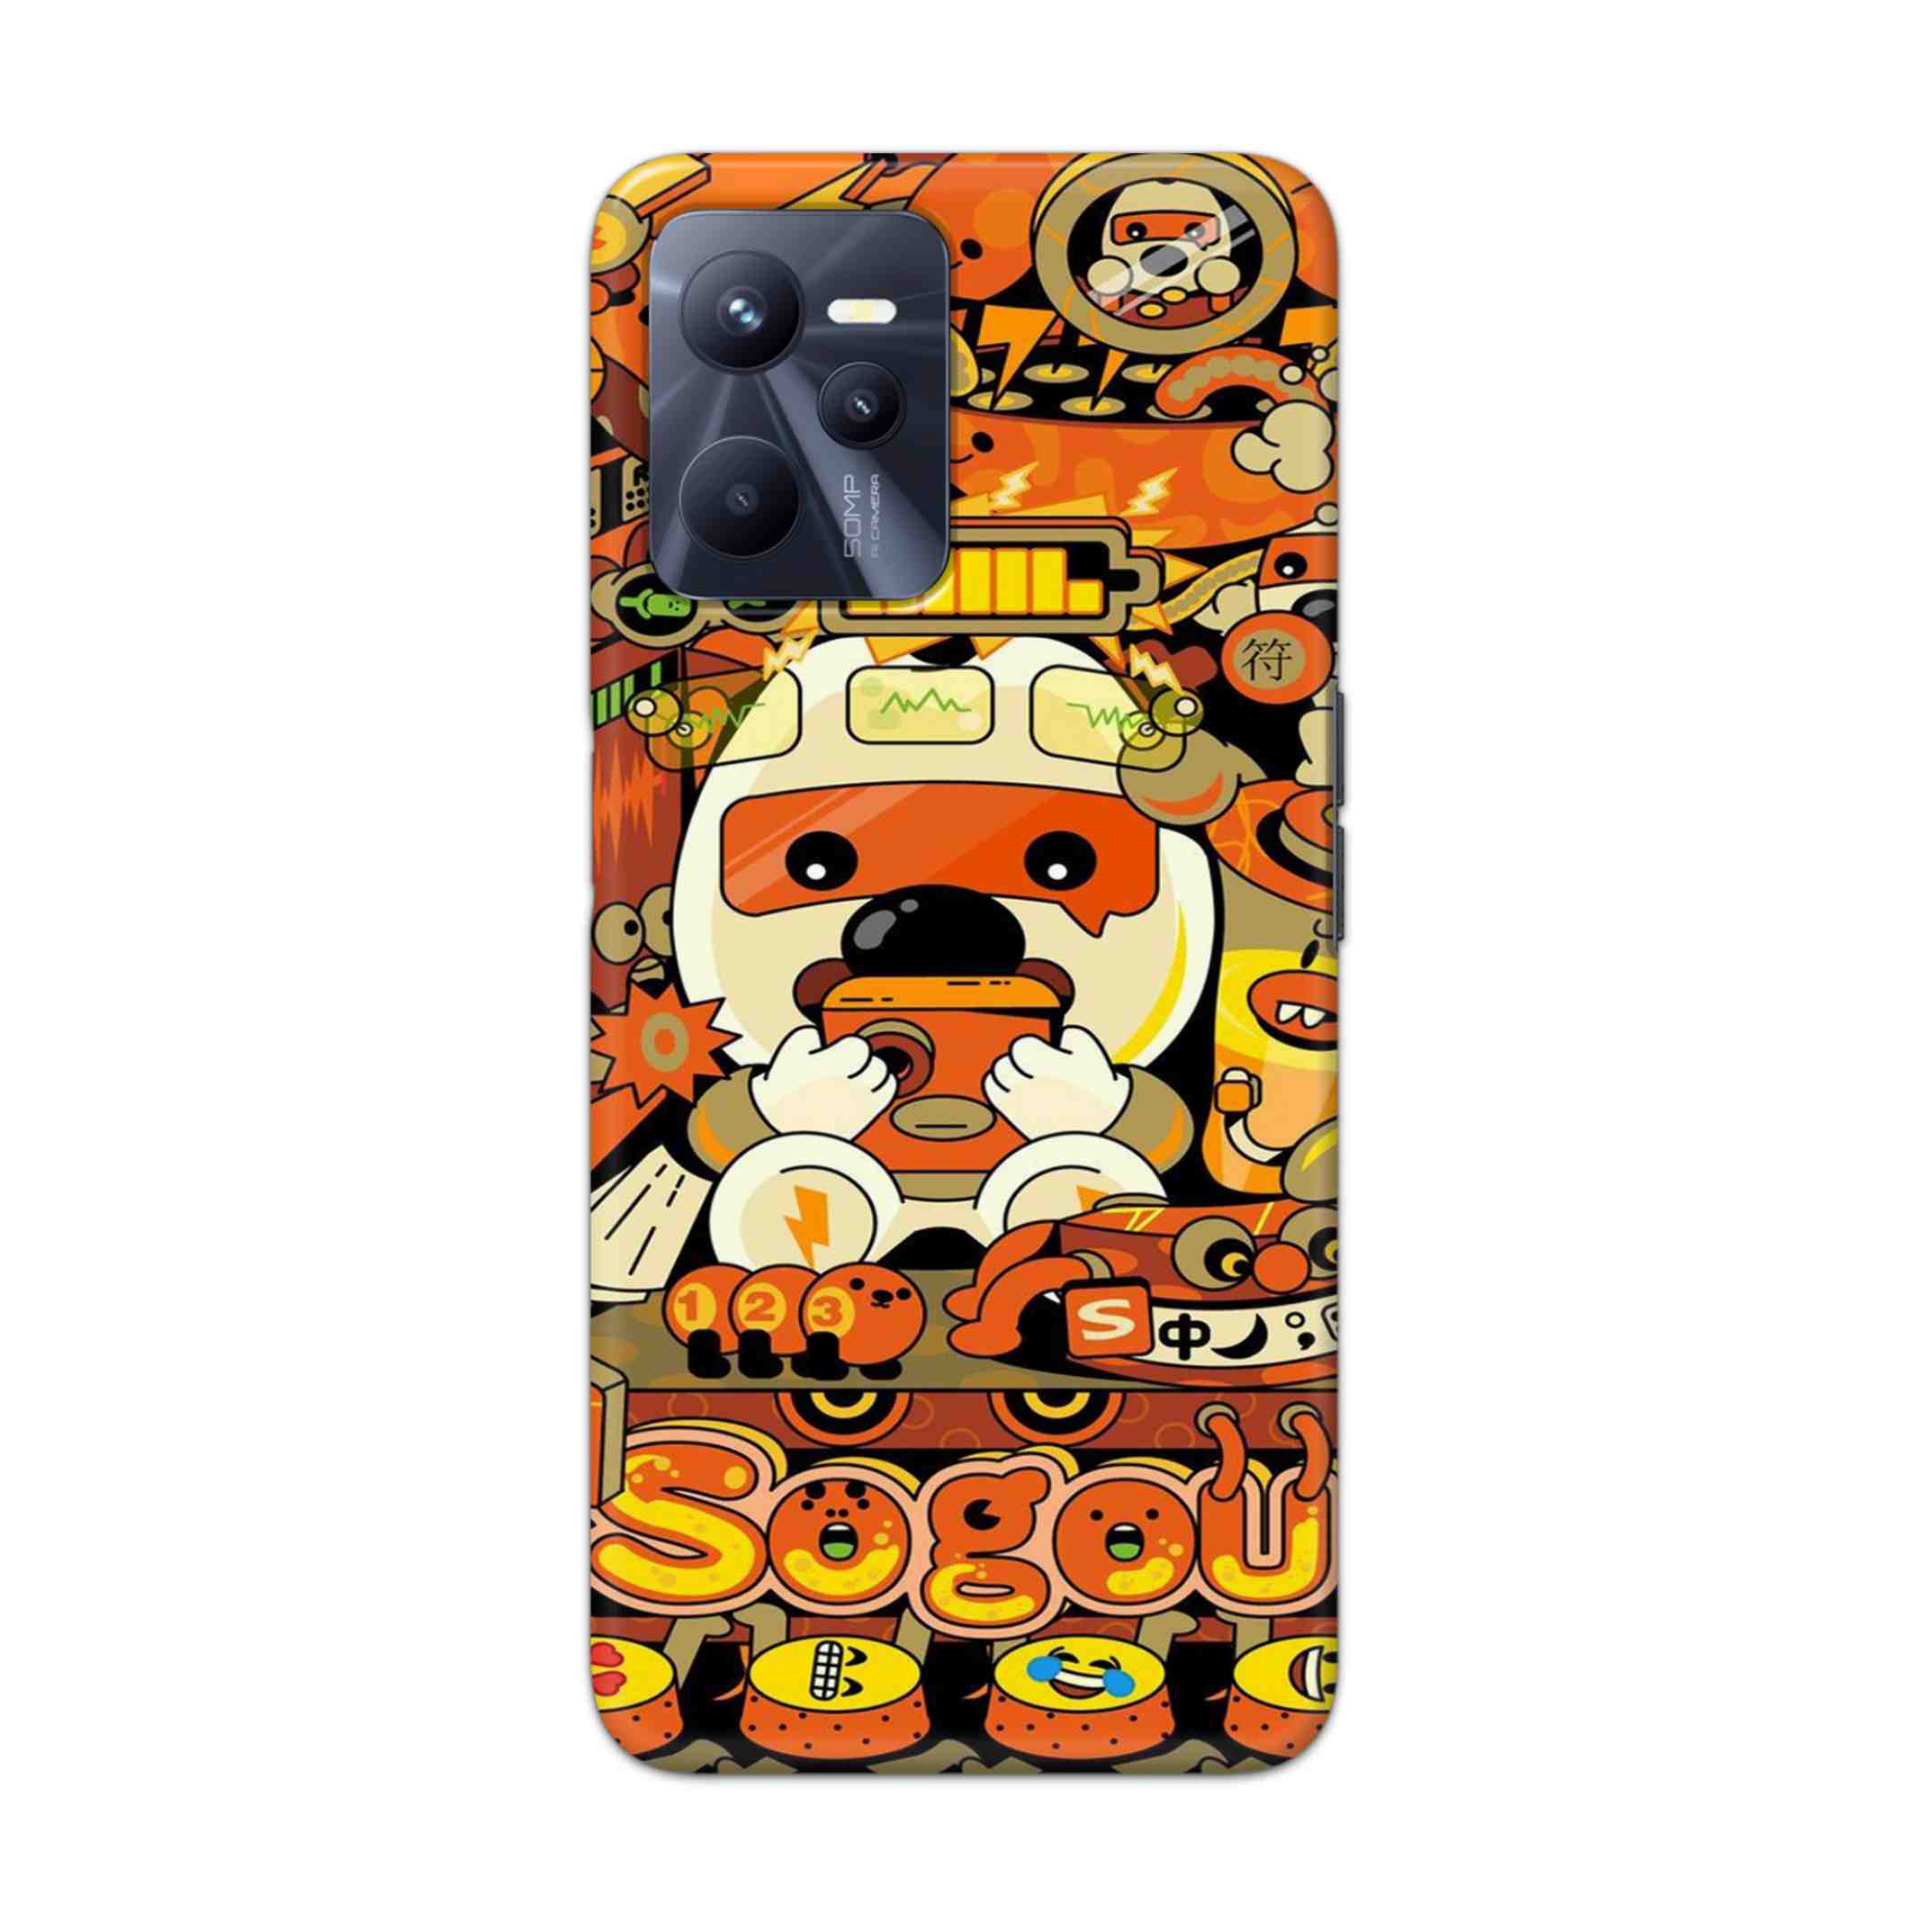 Buy Sogou Hard Back Mobile Phone Case Cover For Realme C35 Online